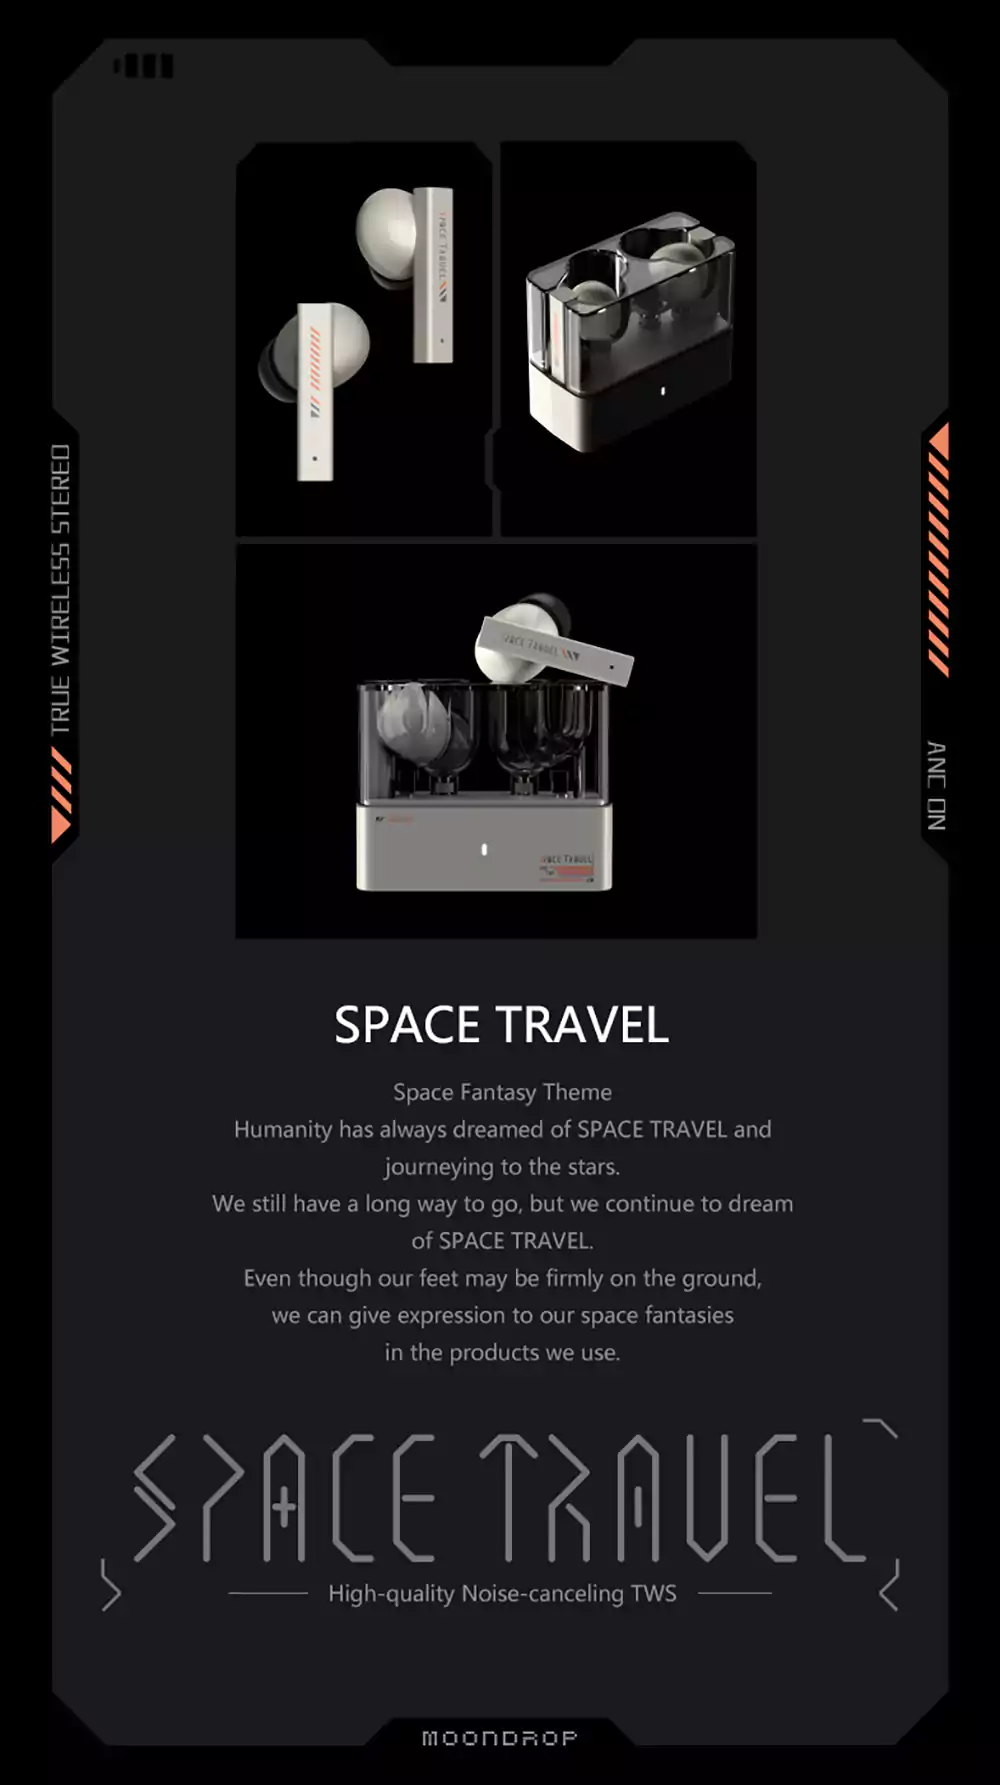 Moondrop Space Travel True Wireless Earbuds 3